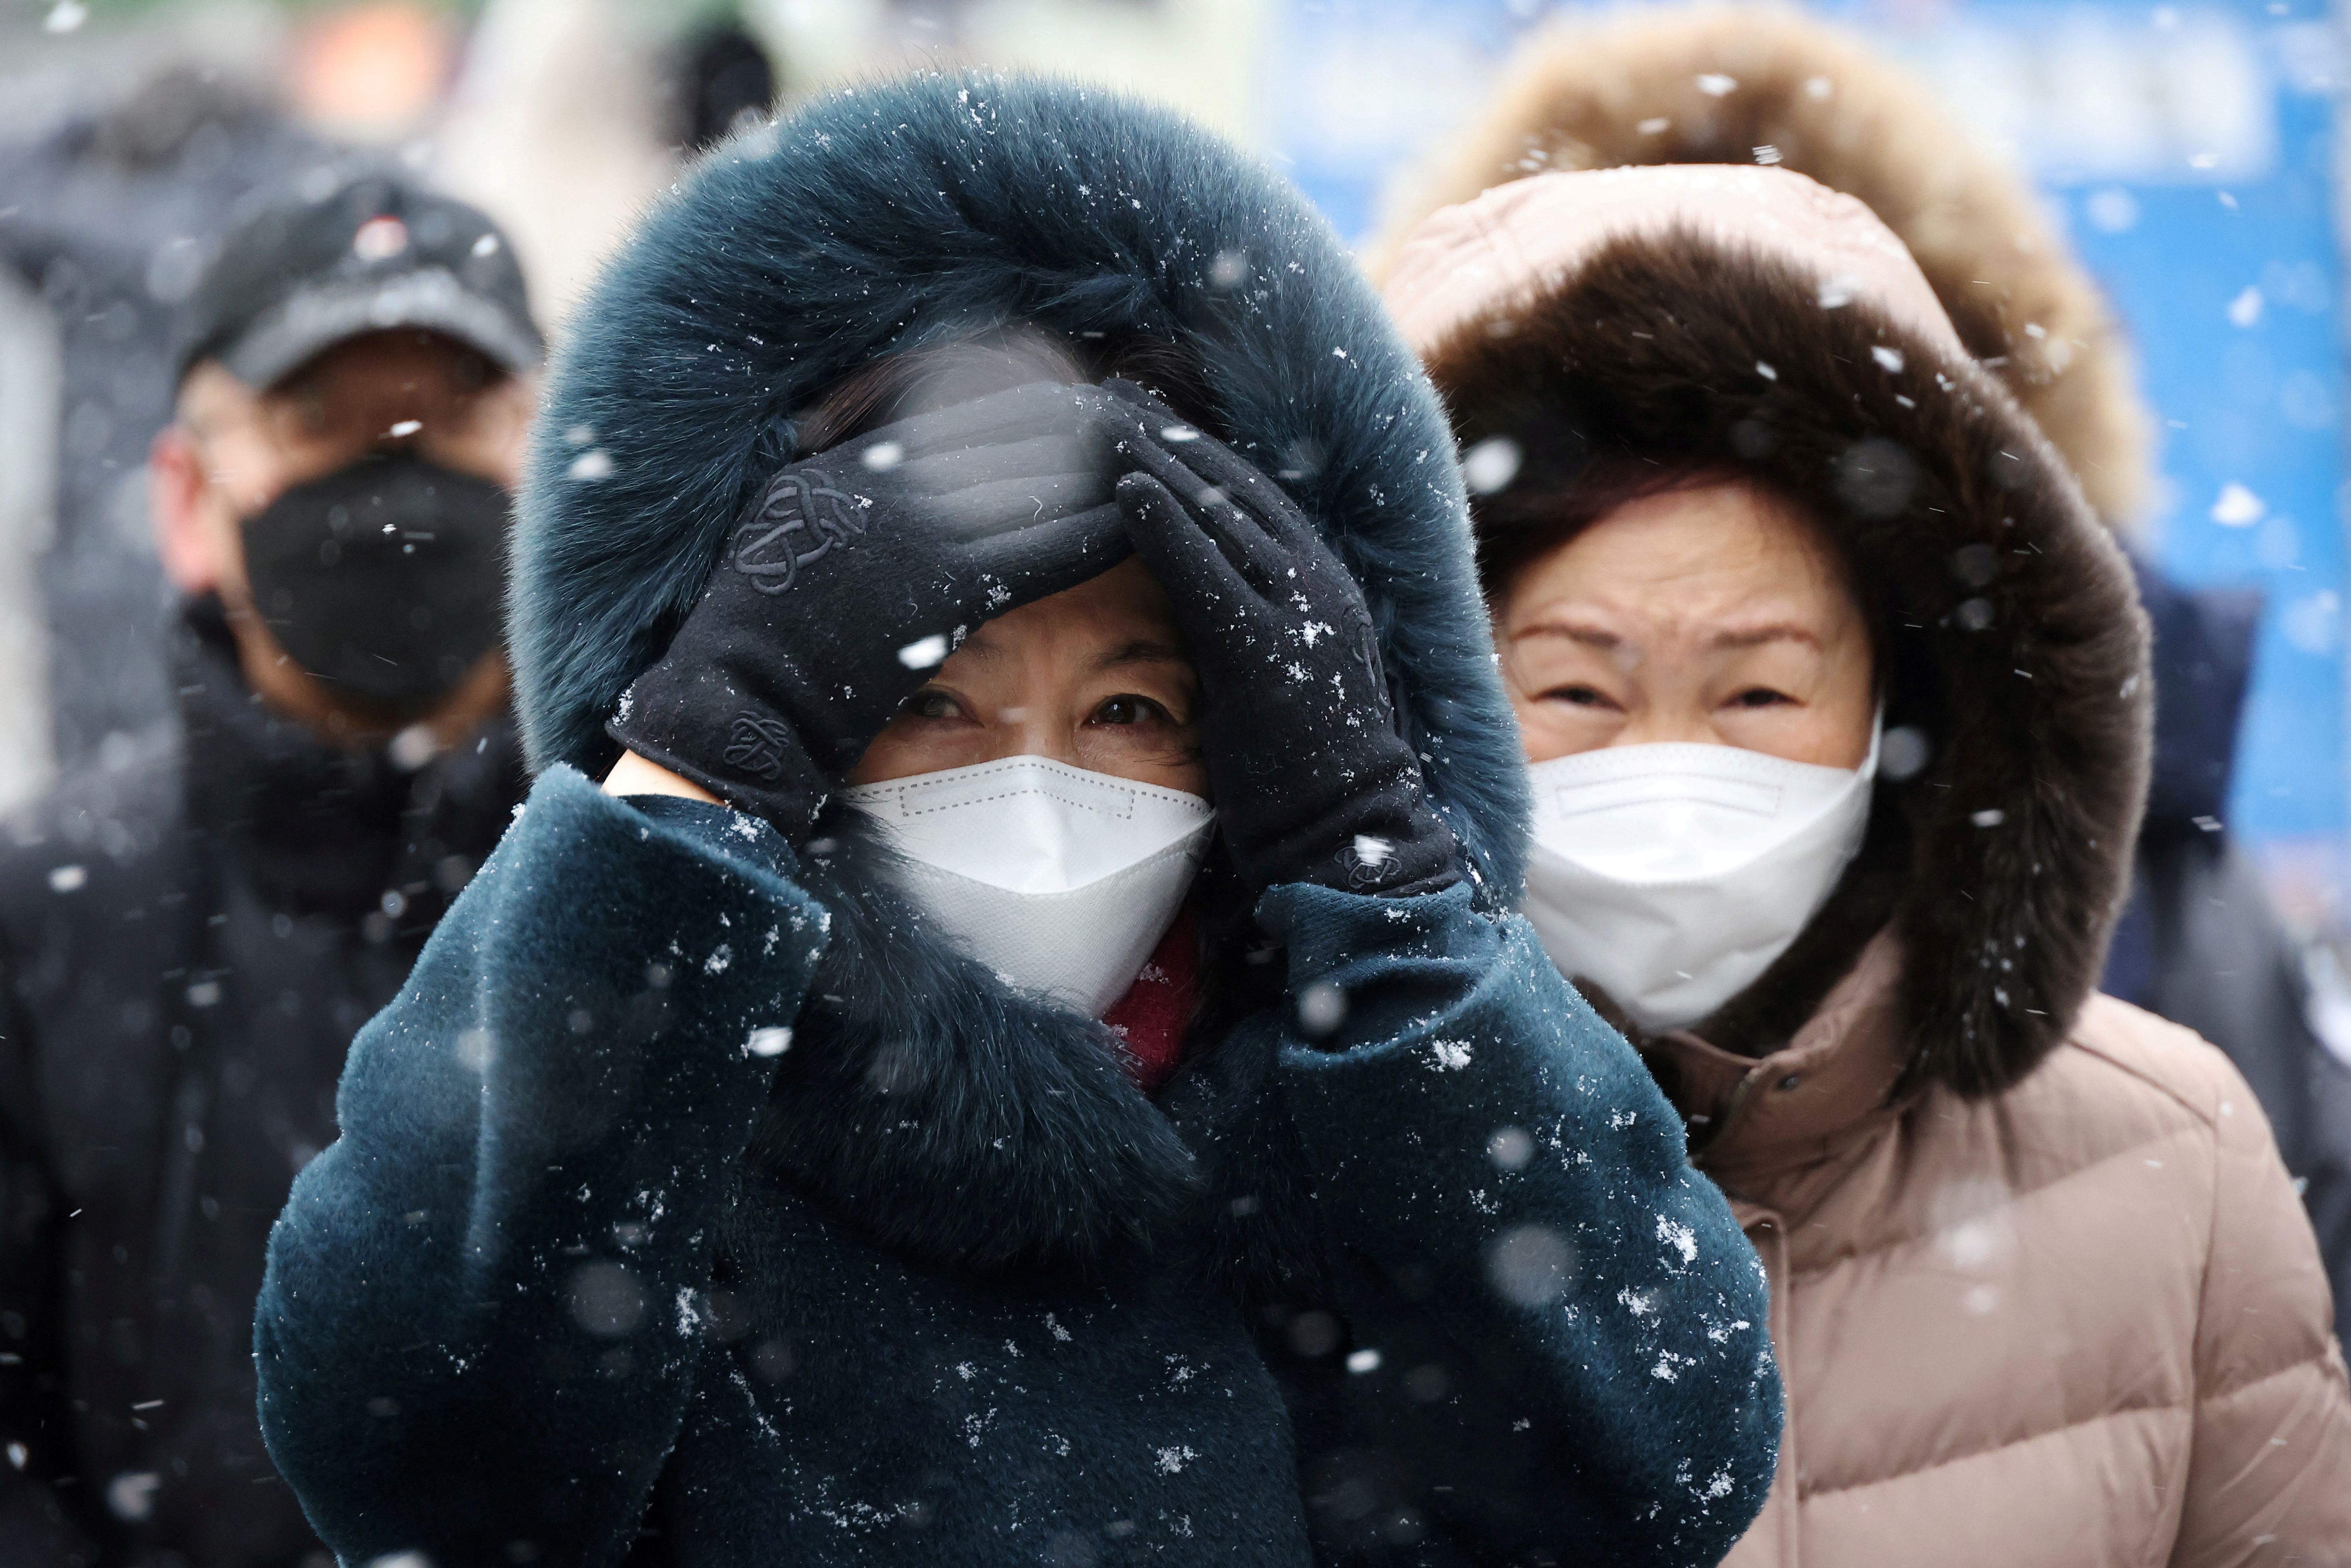 Commuters walk during snowfall, amid the coronavirus disease (COVID-19) pandemic, in central Seoul